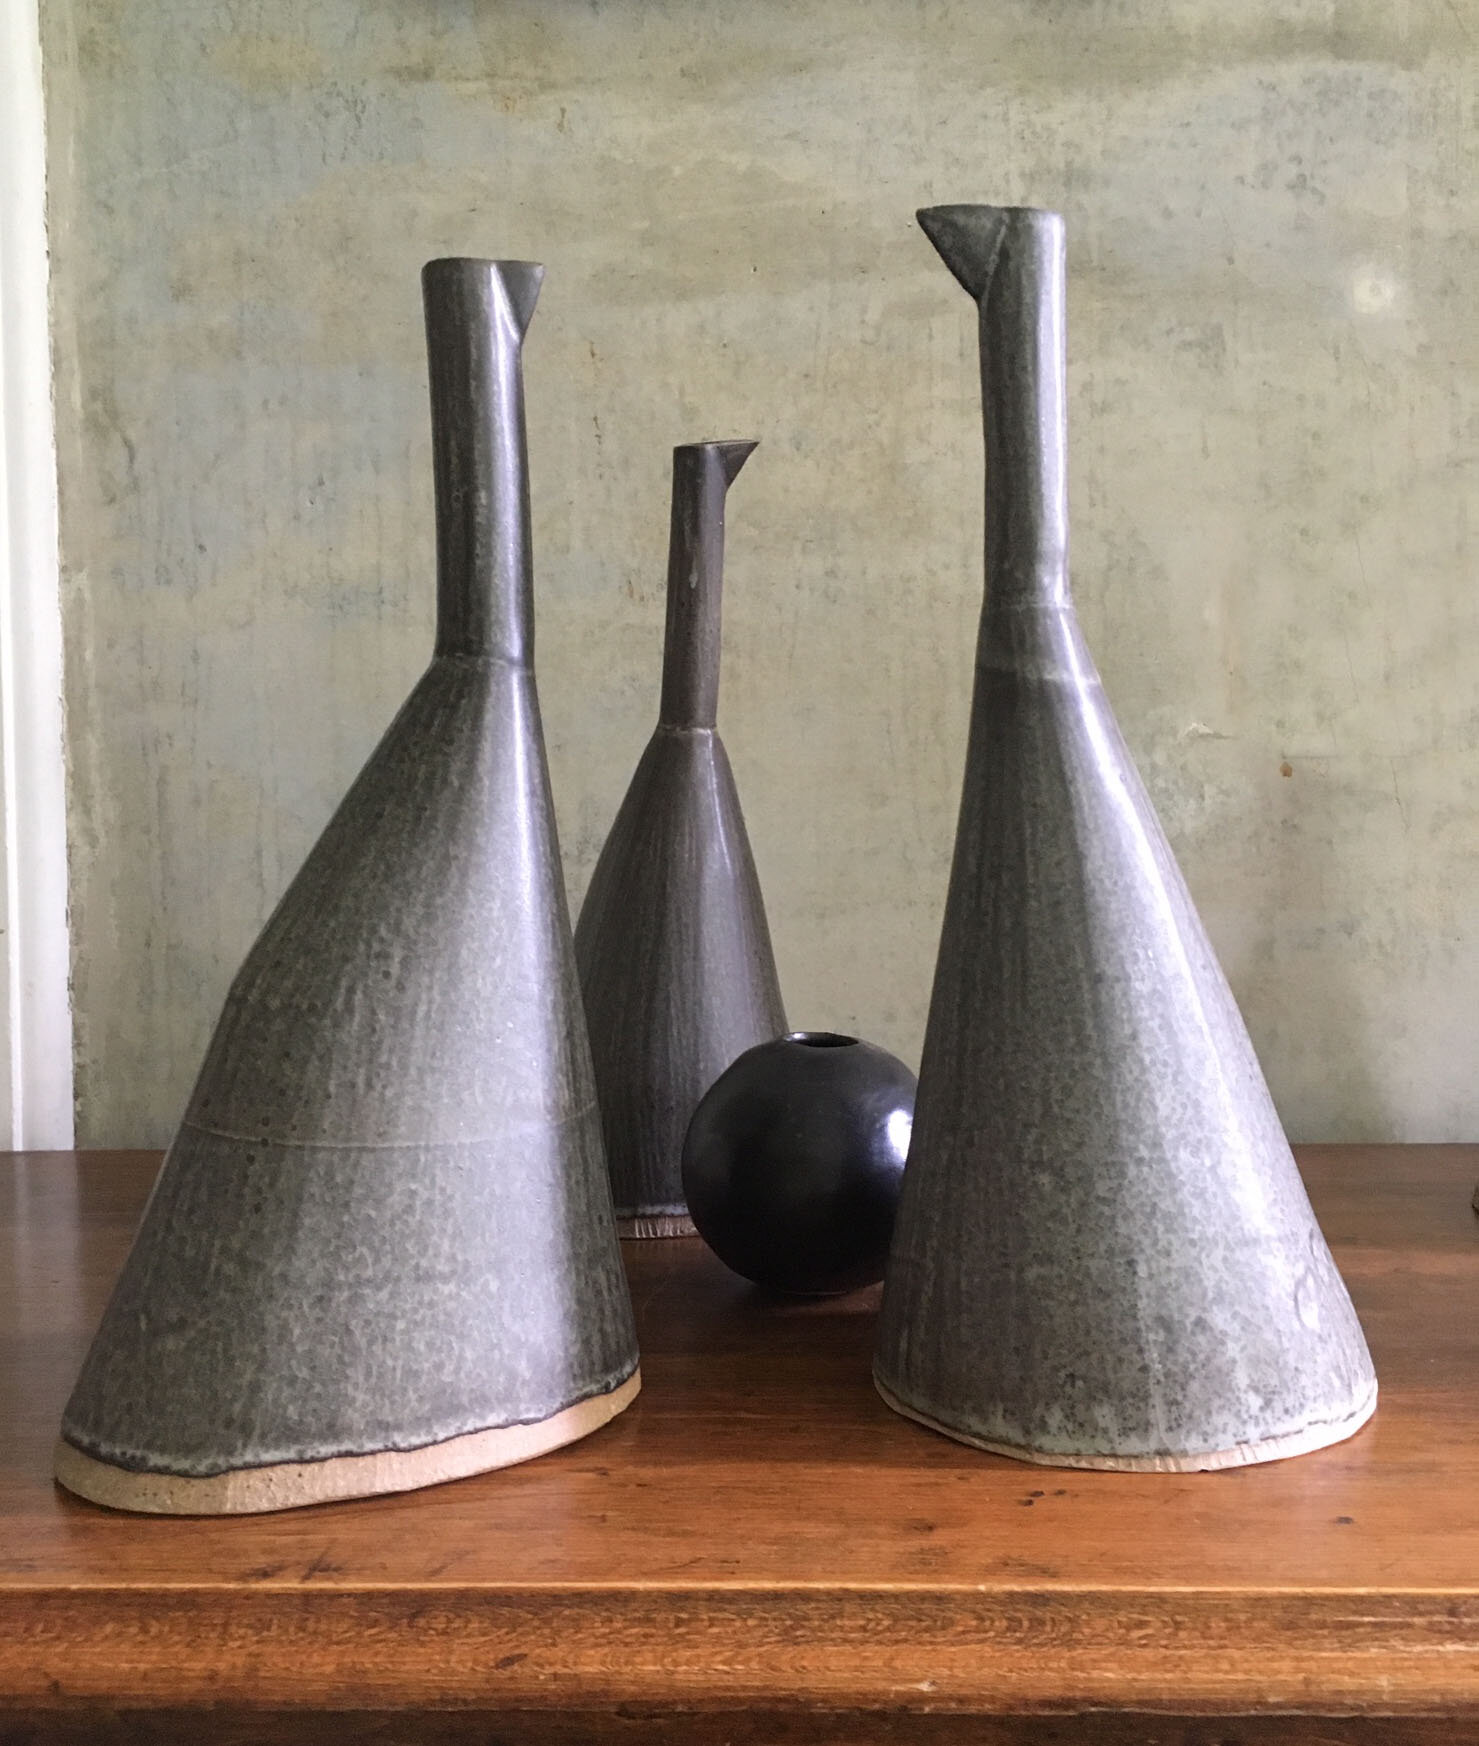 Details about   Vintage Pair of Ceramic Dice 